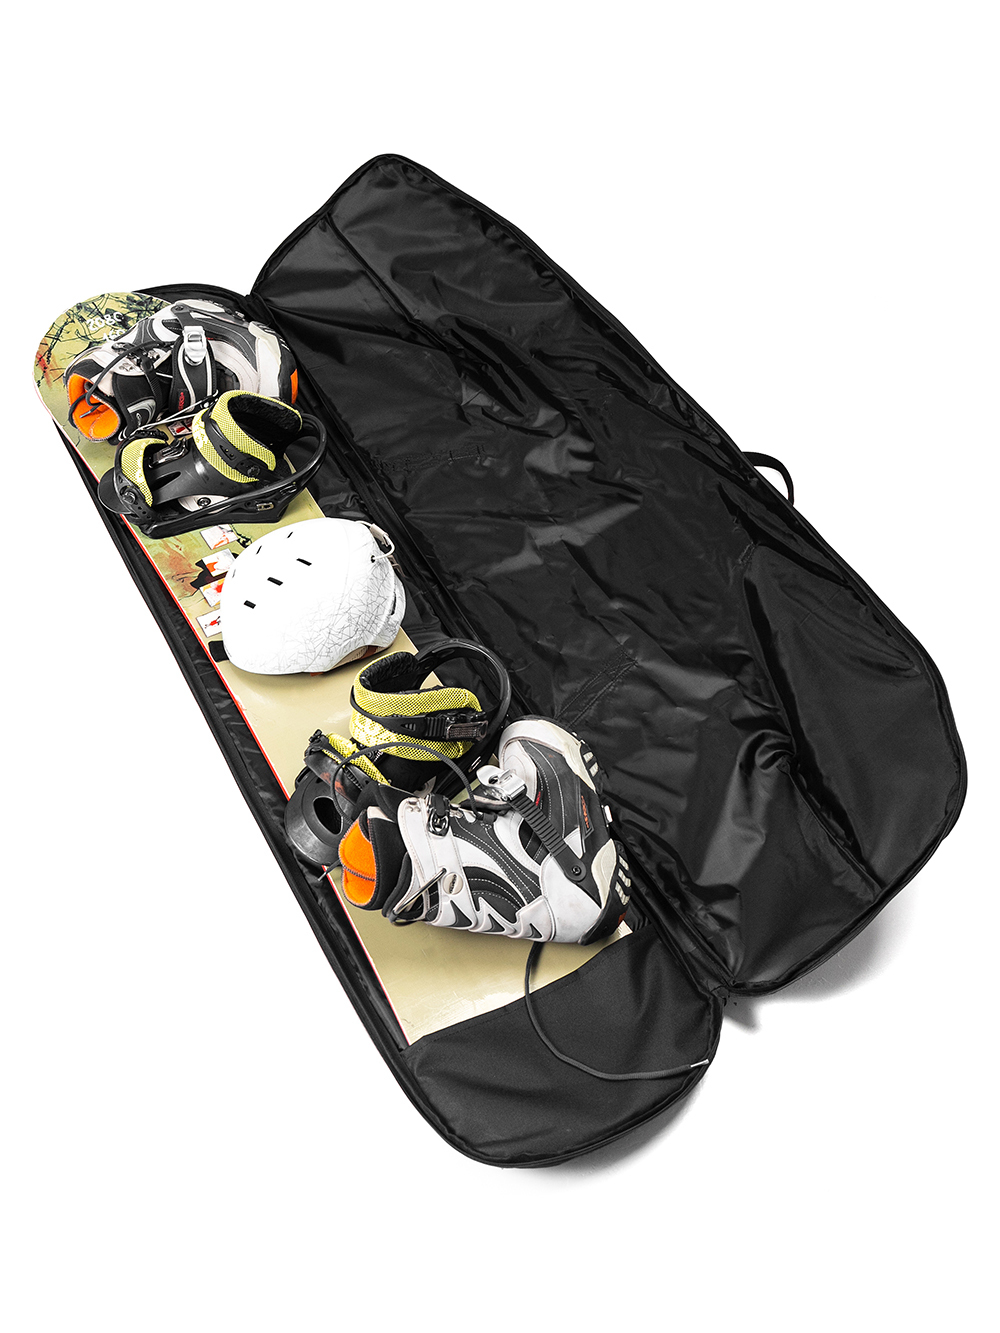 фото Чехол для сноуборда "рюкзак" длина 165 черно синий с лямками для спины bsw